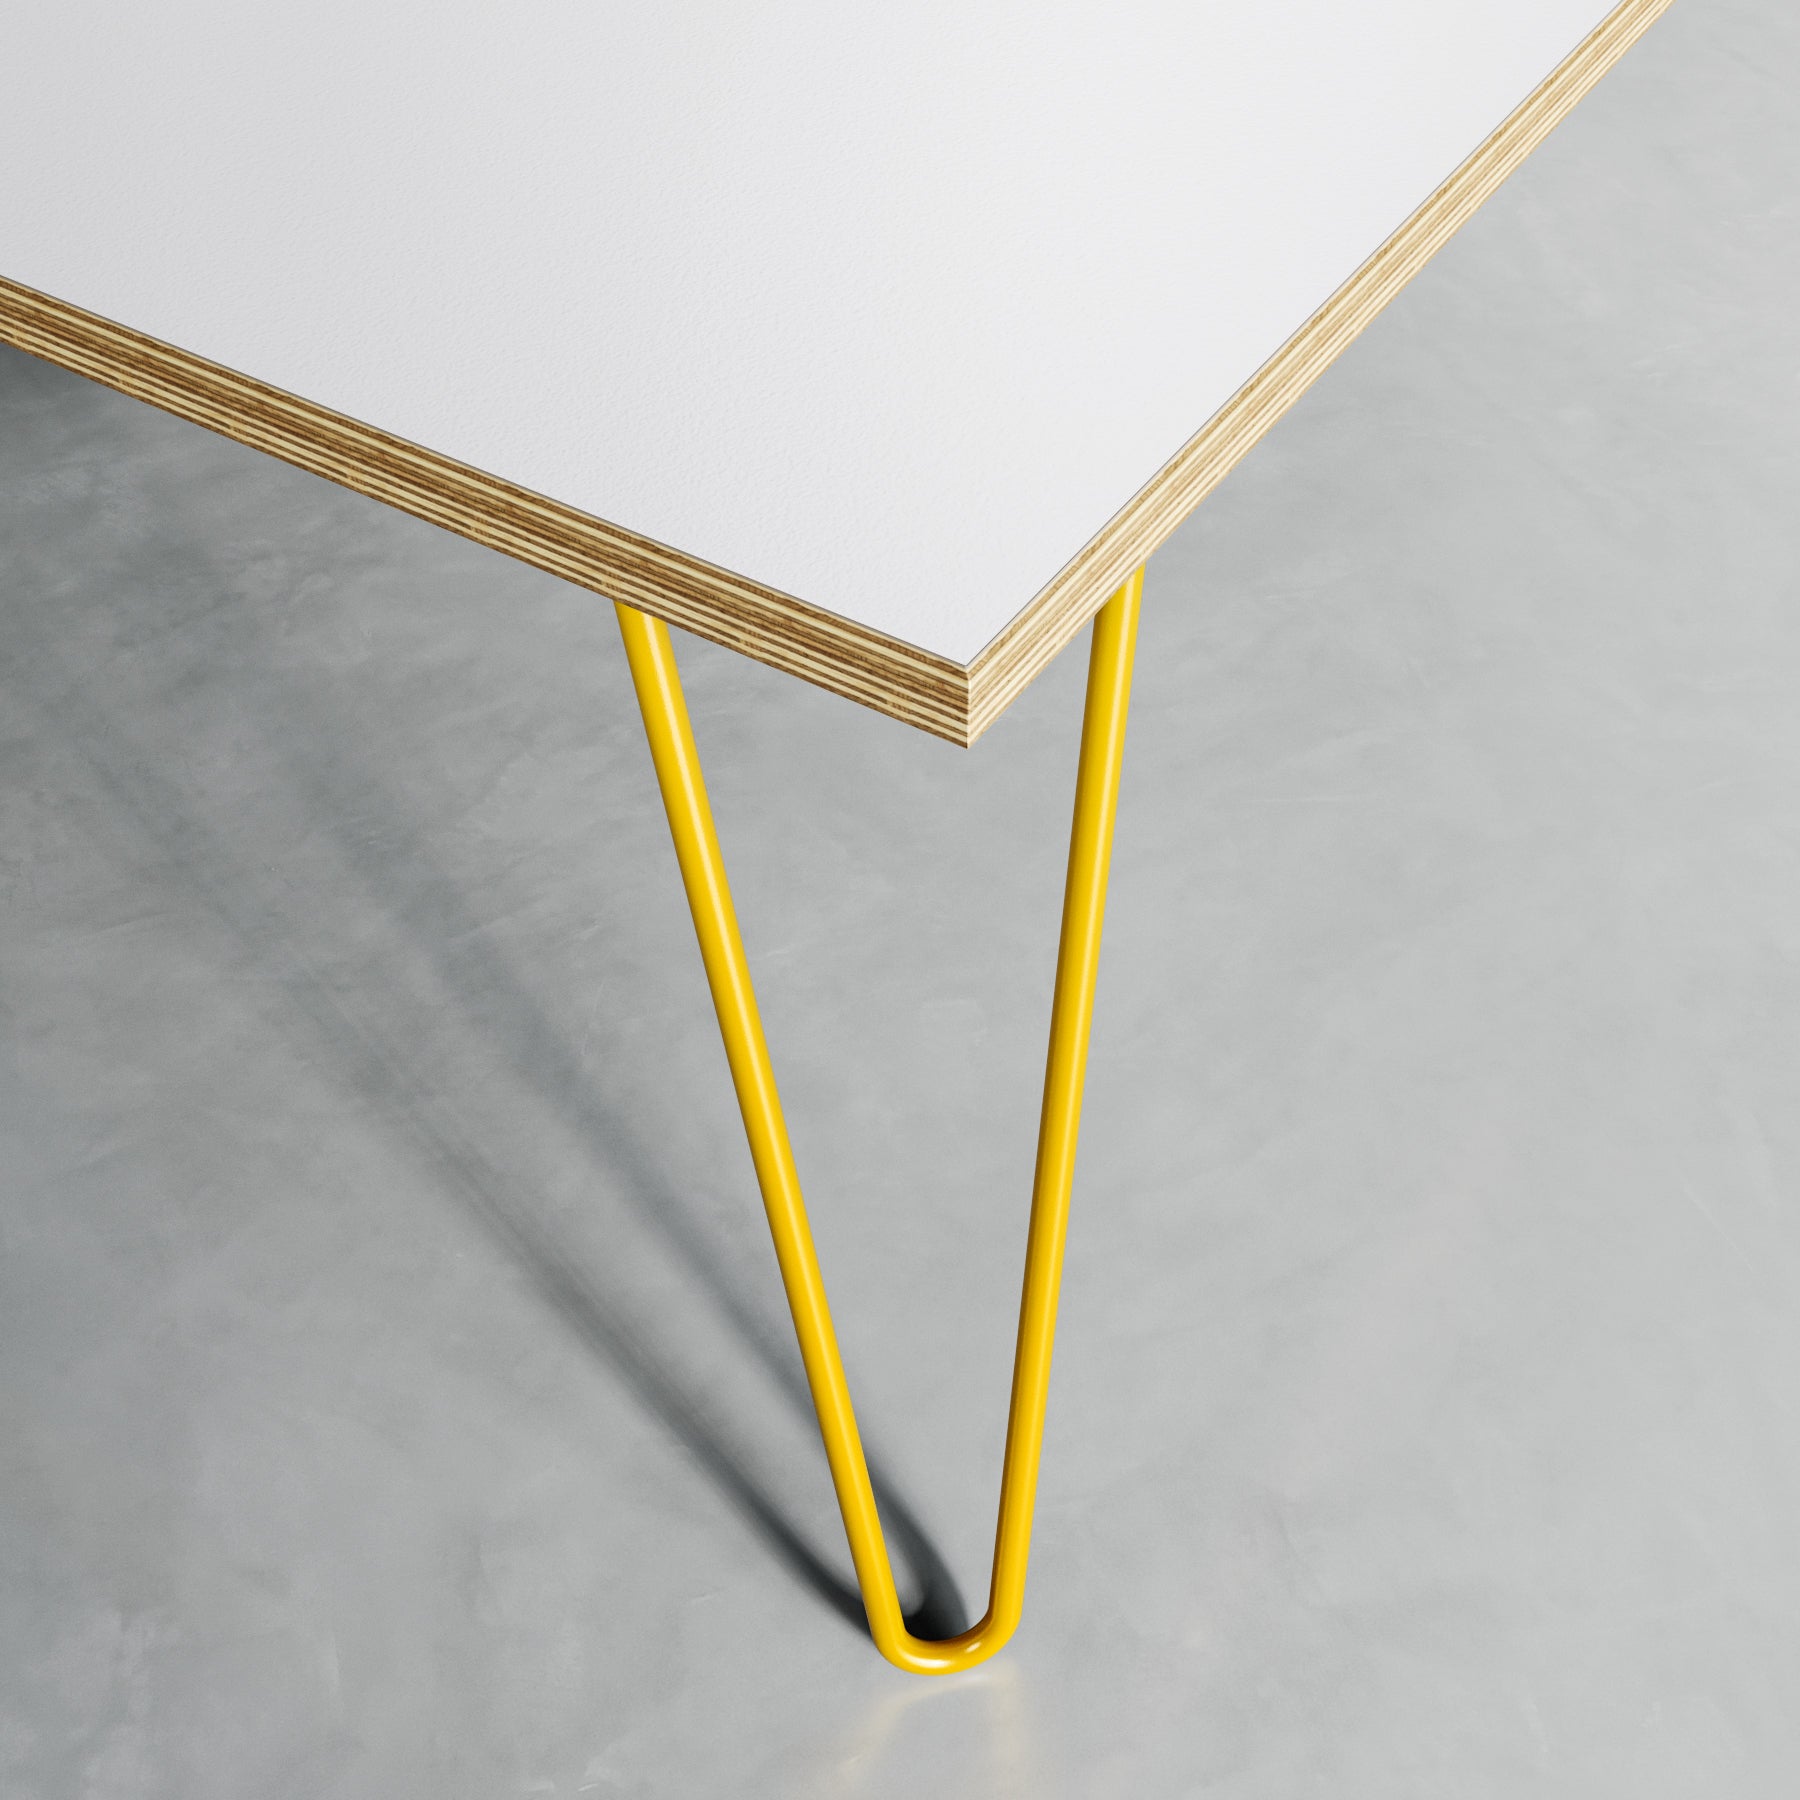 35cm Hairpin Legs - Coffee Table